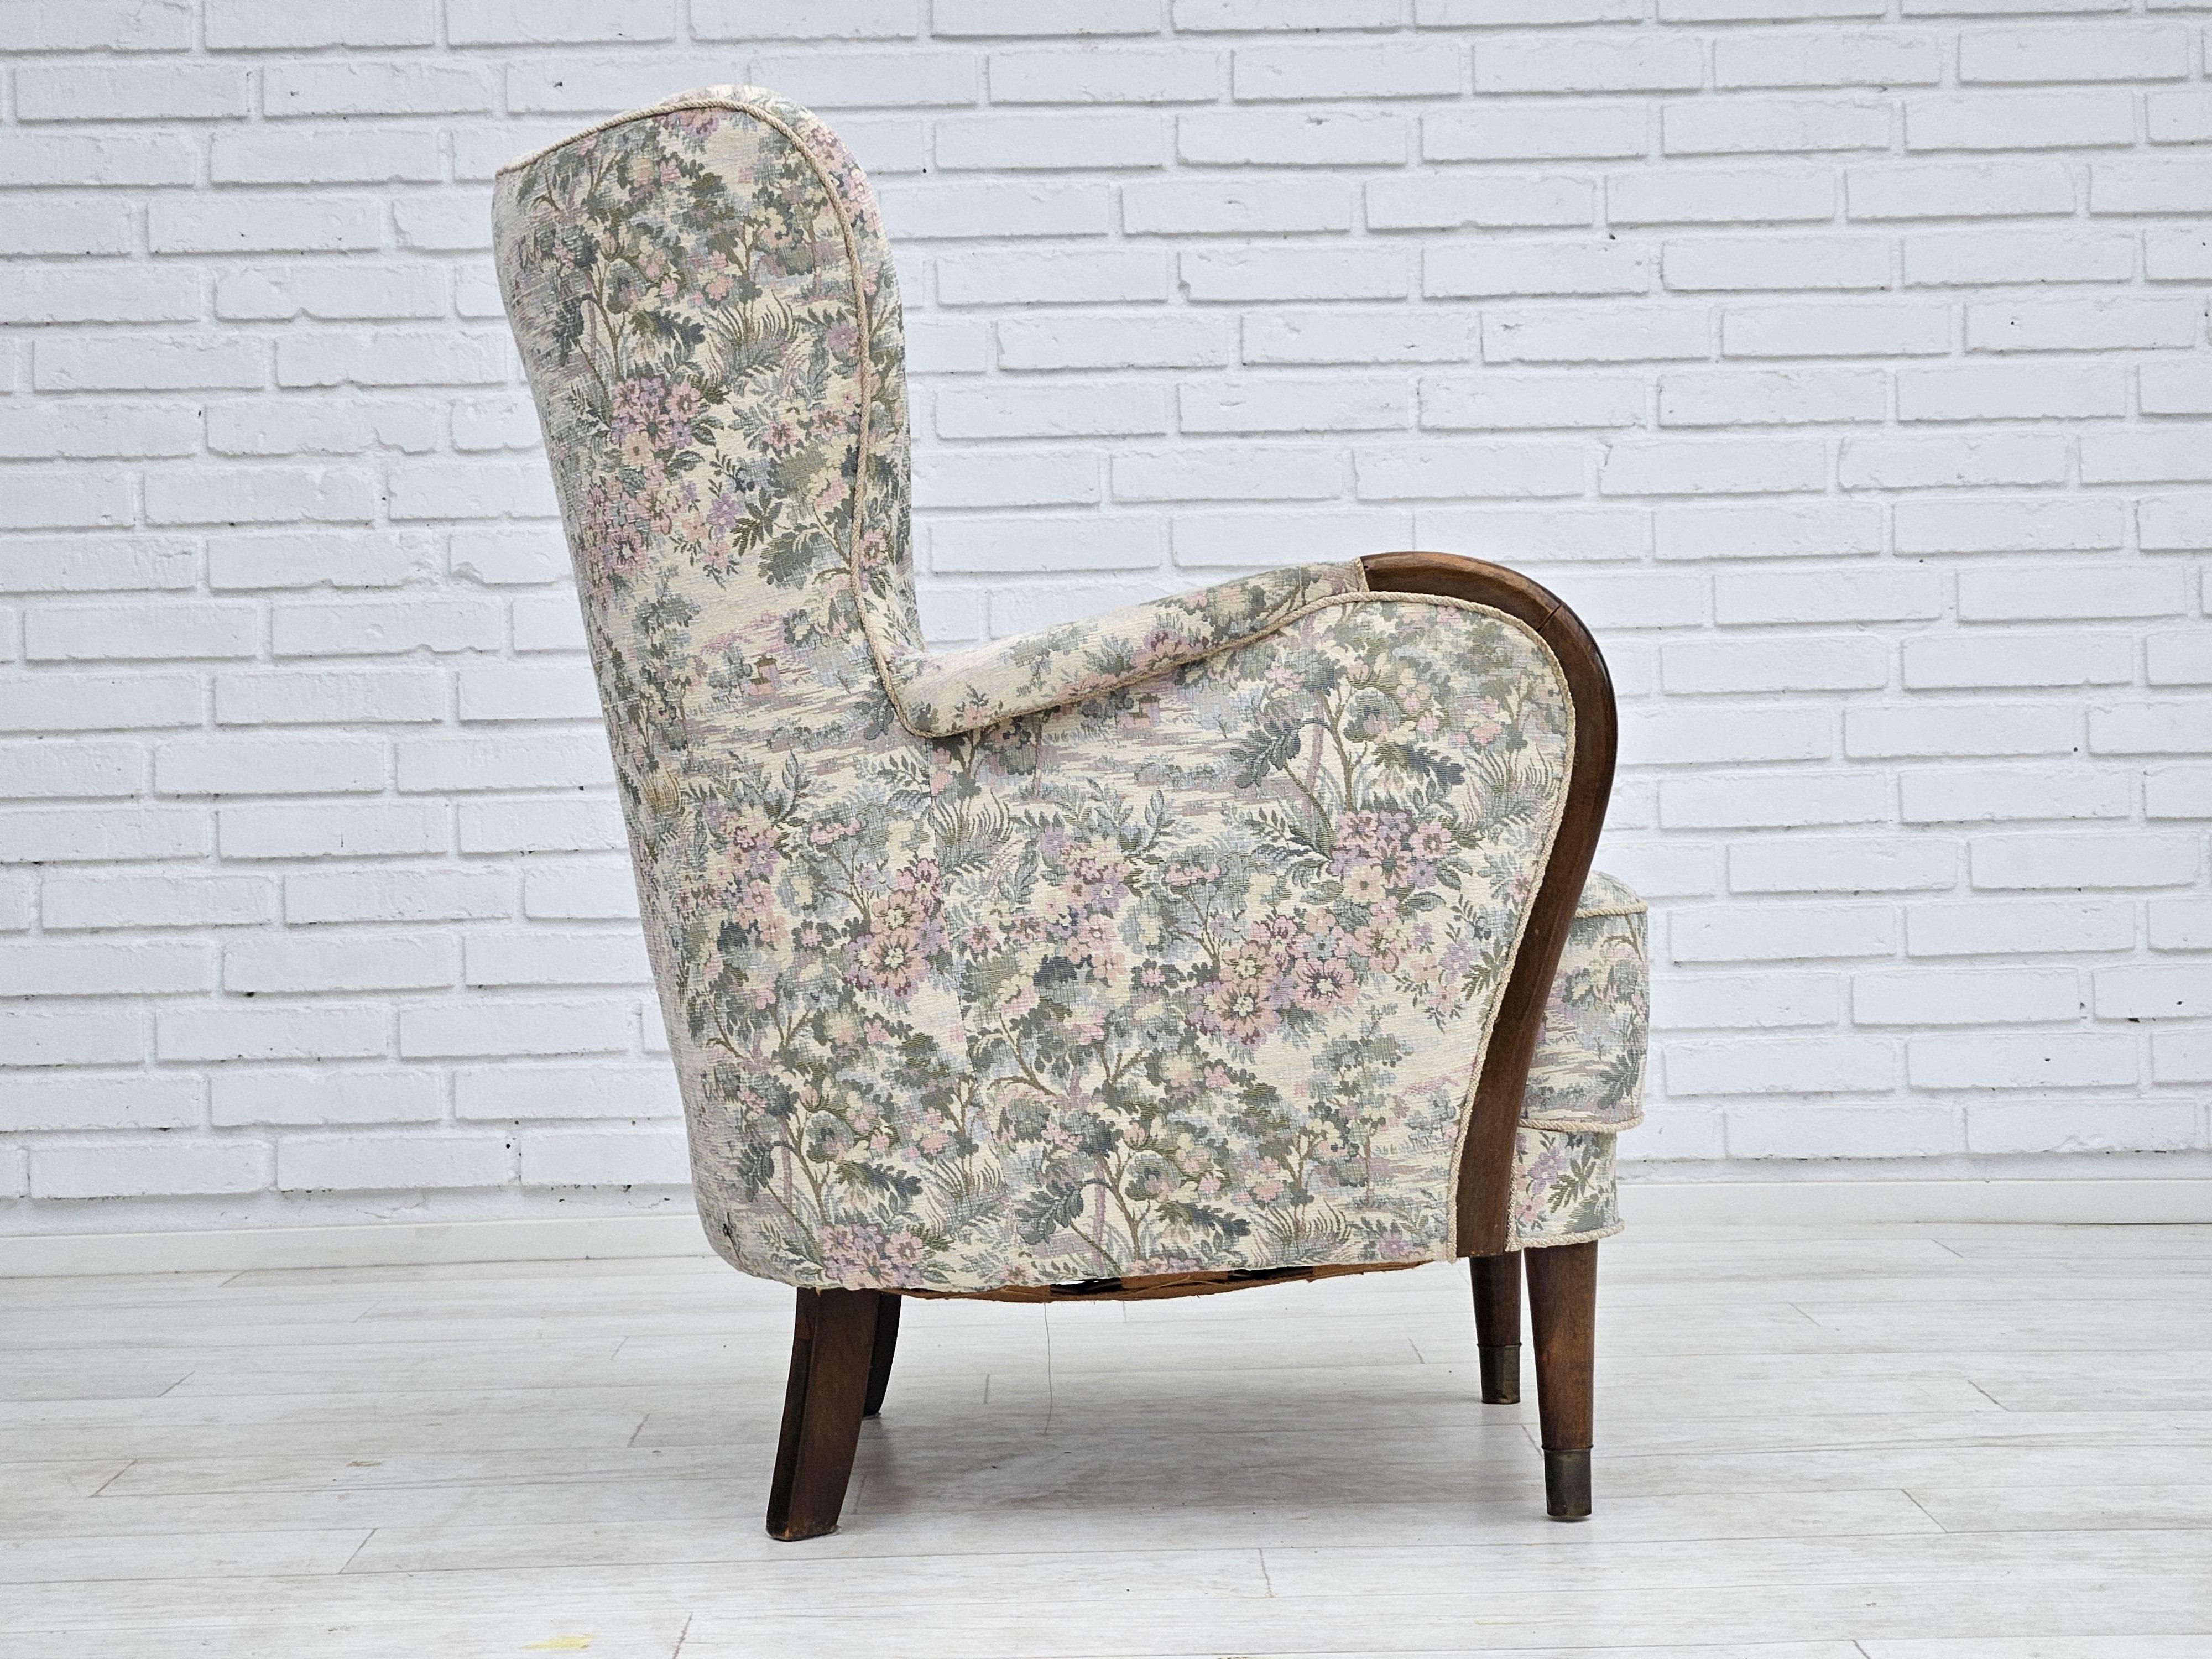 Fabric 1955-60s, Danish design, armchair in floral multicolor fabric, original. For Sale